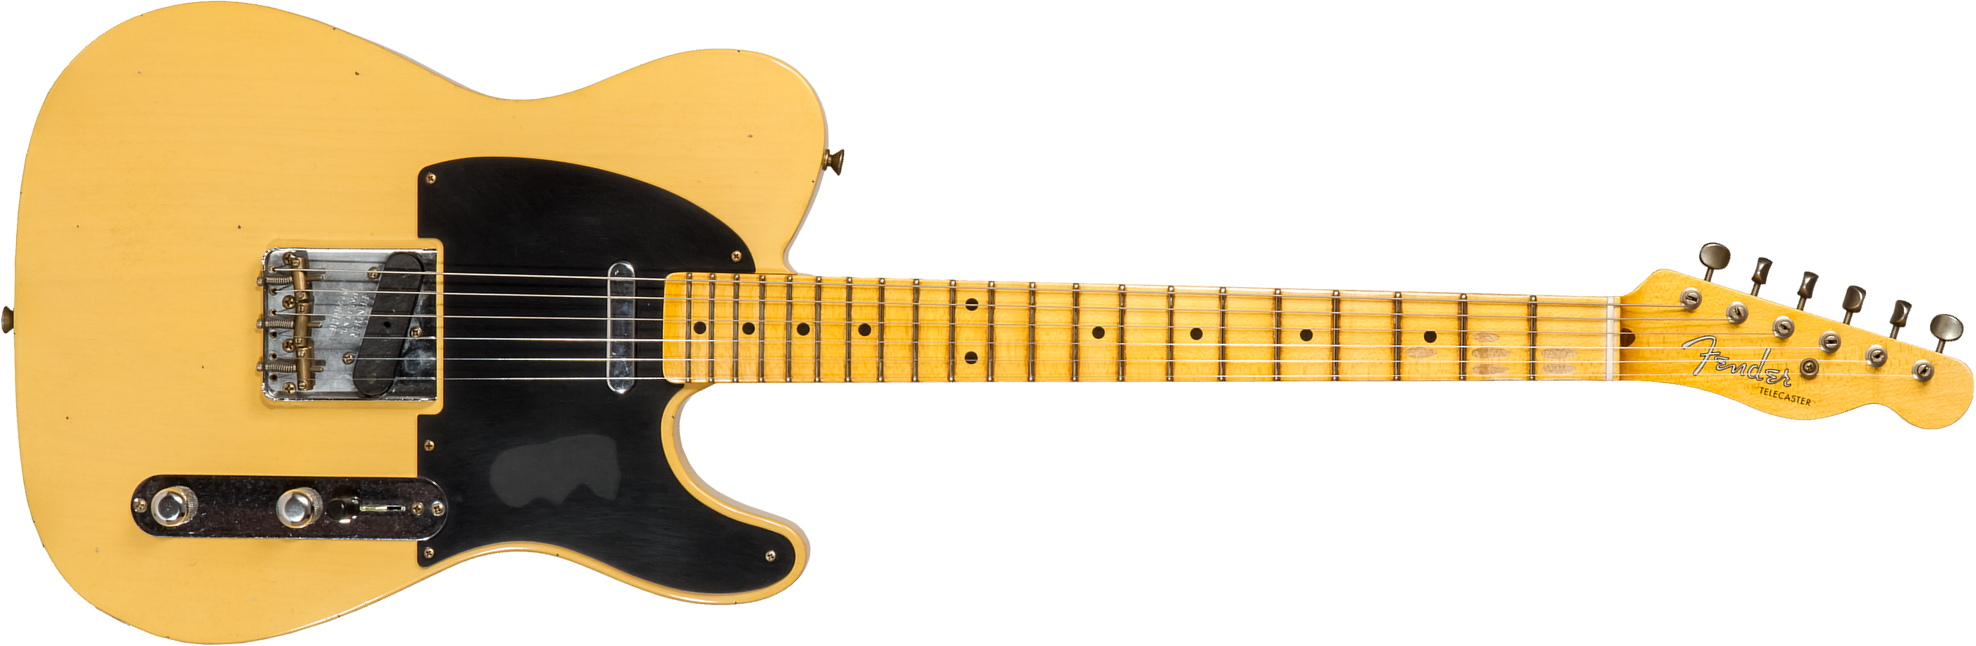 Fender Custom Shop Tele 1953 2s Ht Mn #r128606 - Journeyman Relic Aged Nocaster Blonde - Tel shape electric guitar - Main picture